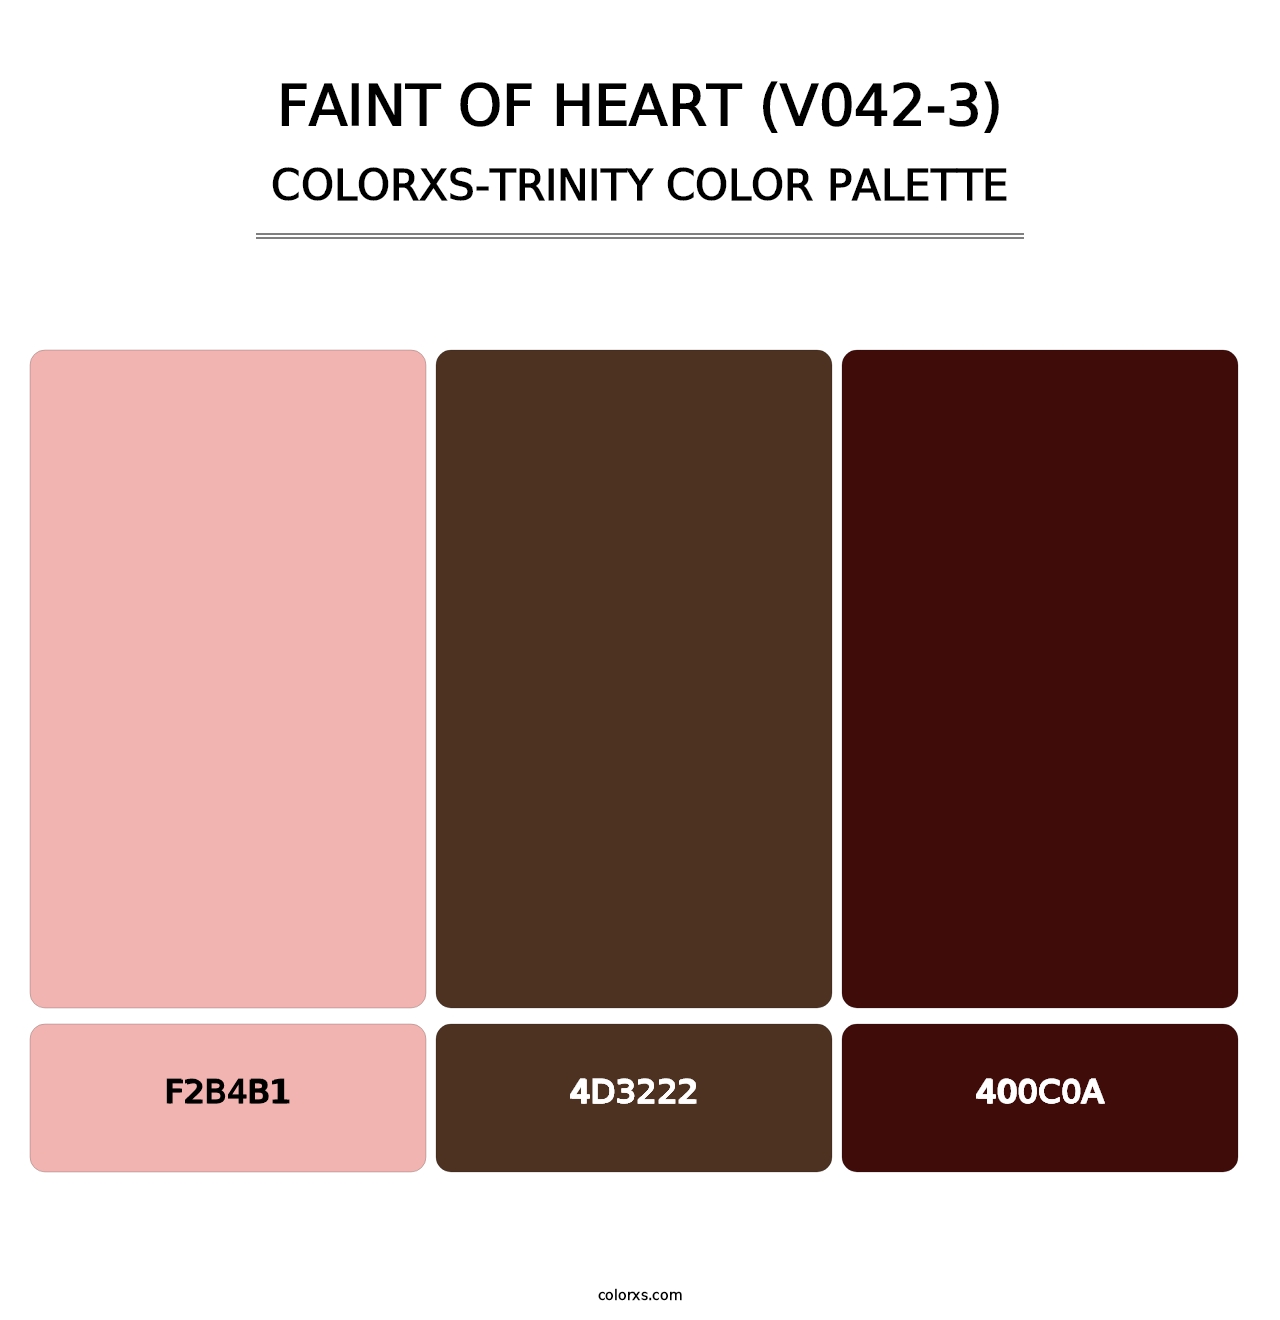 Faint of Heart (V042-3) - Colorxs Trinity Palette